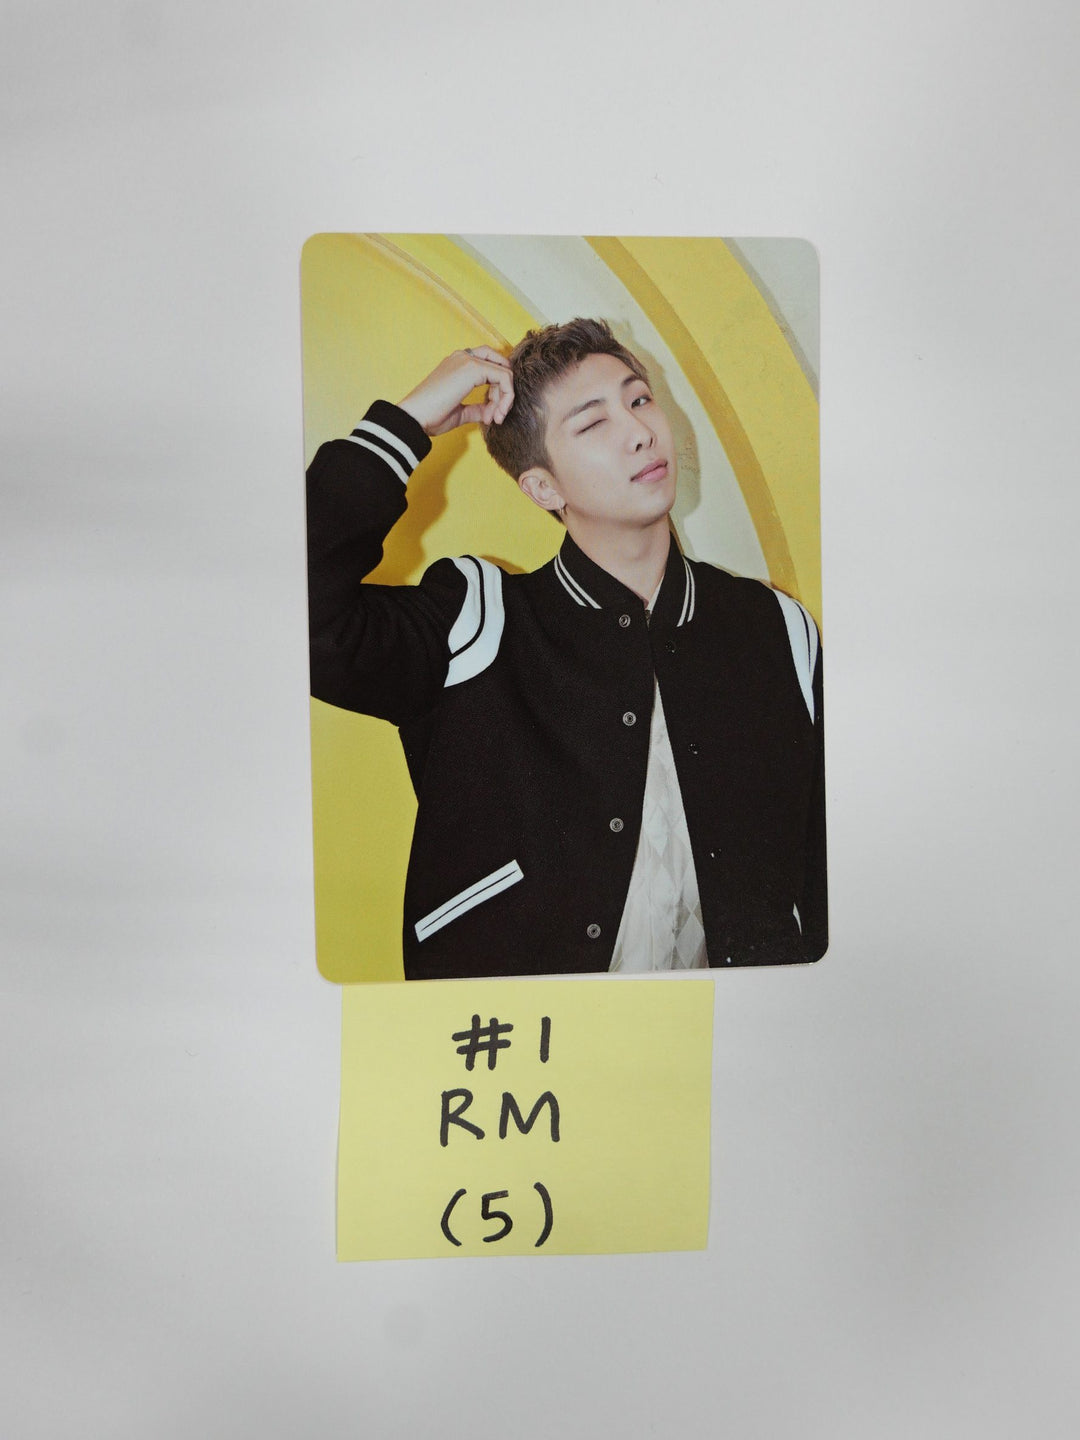 BTS "Permission To Dance" - Weverse Shop Photocard [Jung kook, RM]